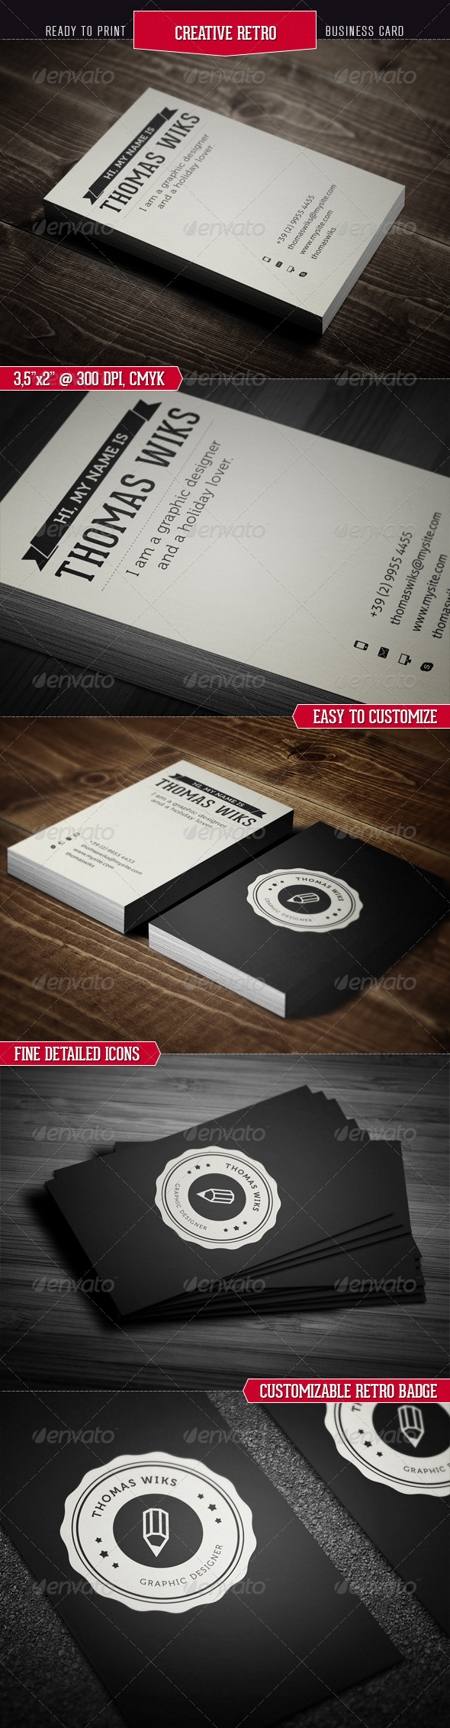 GraphicRiver: Creative Retro Business Card